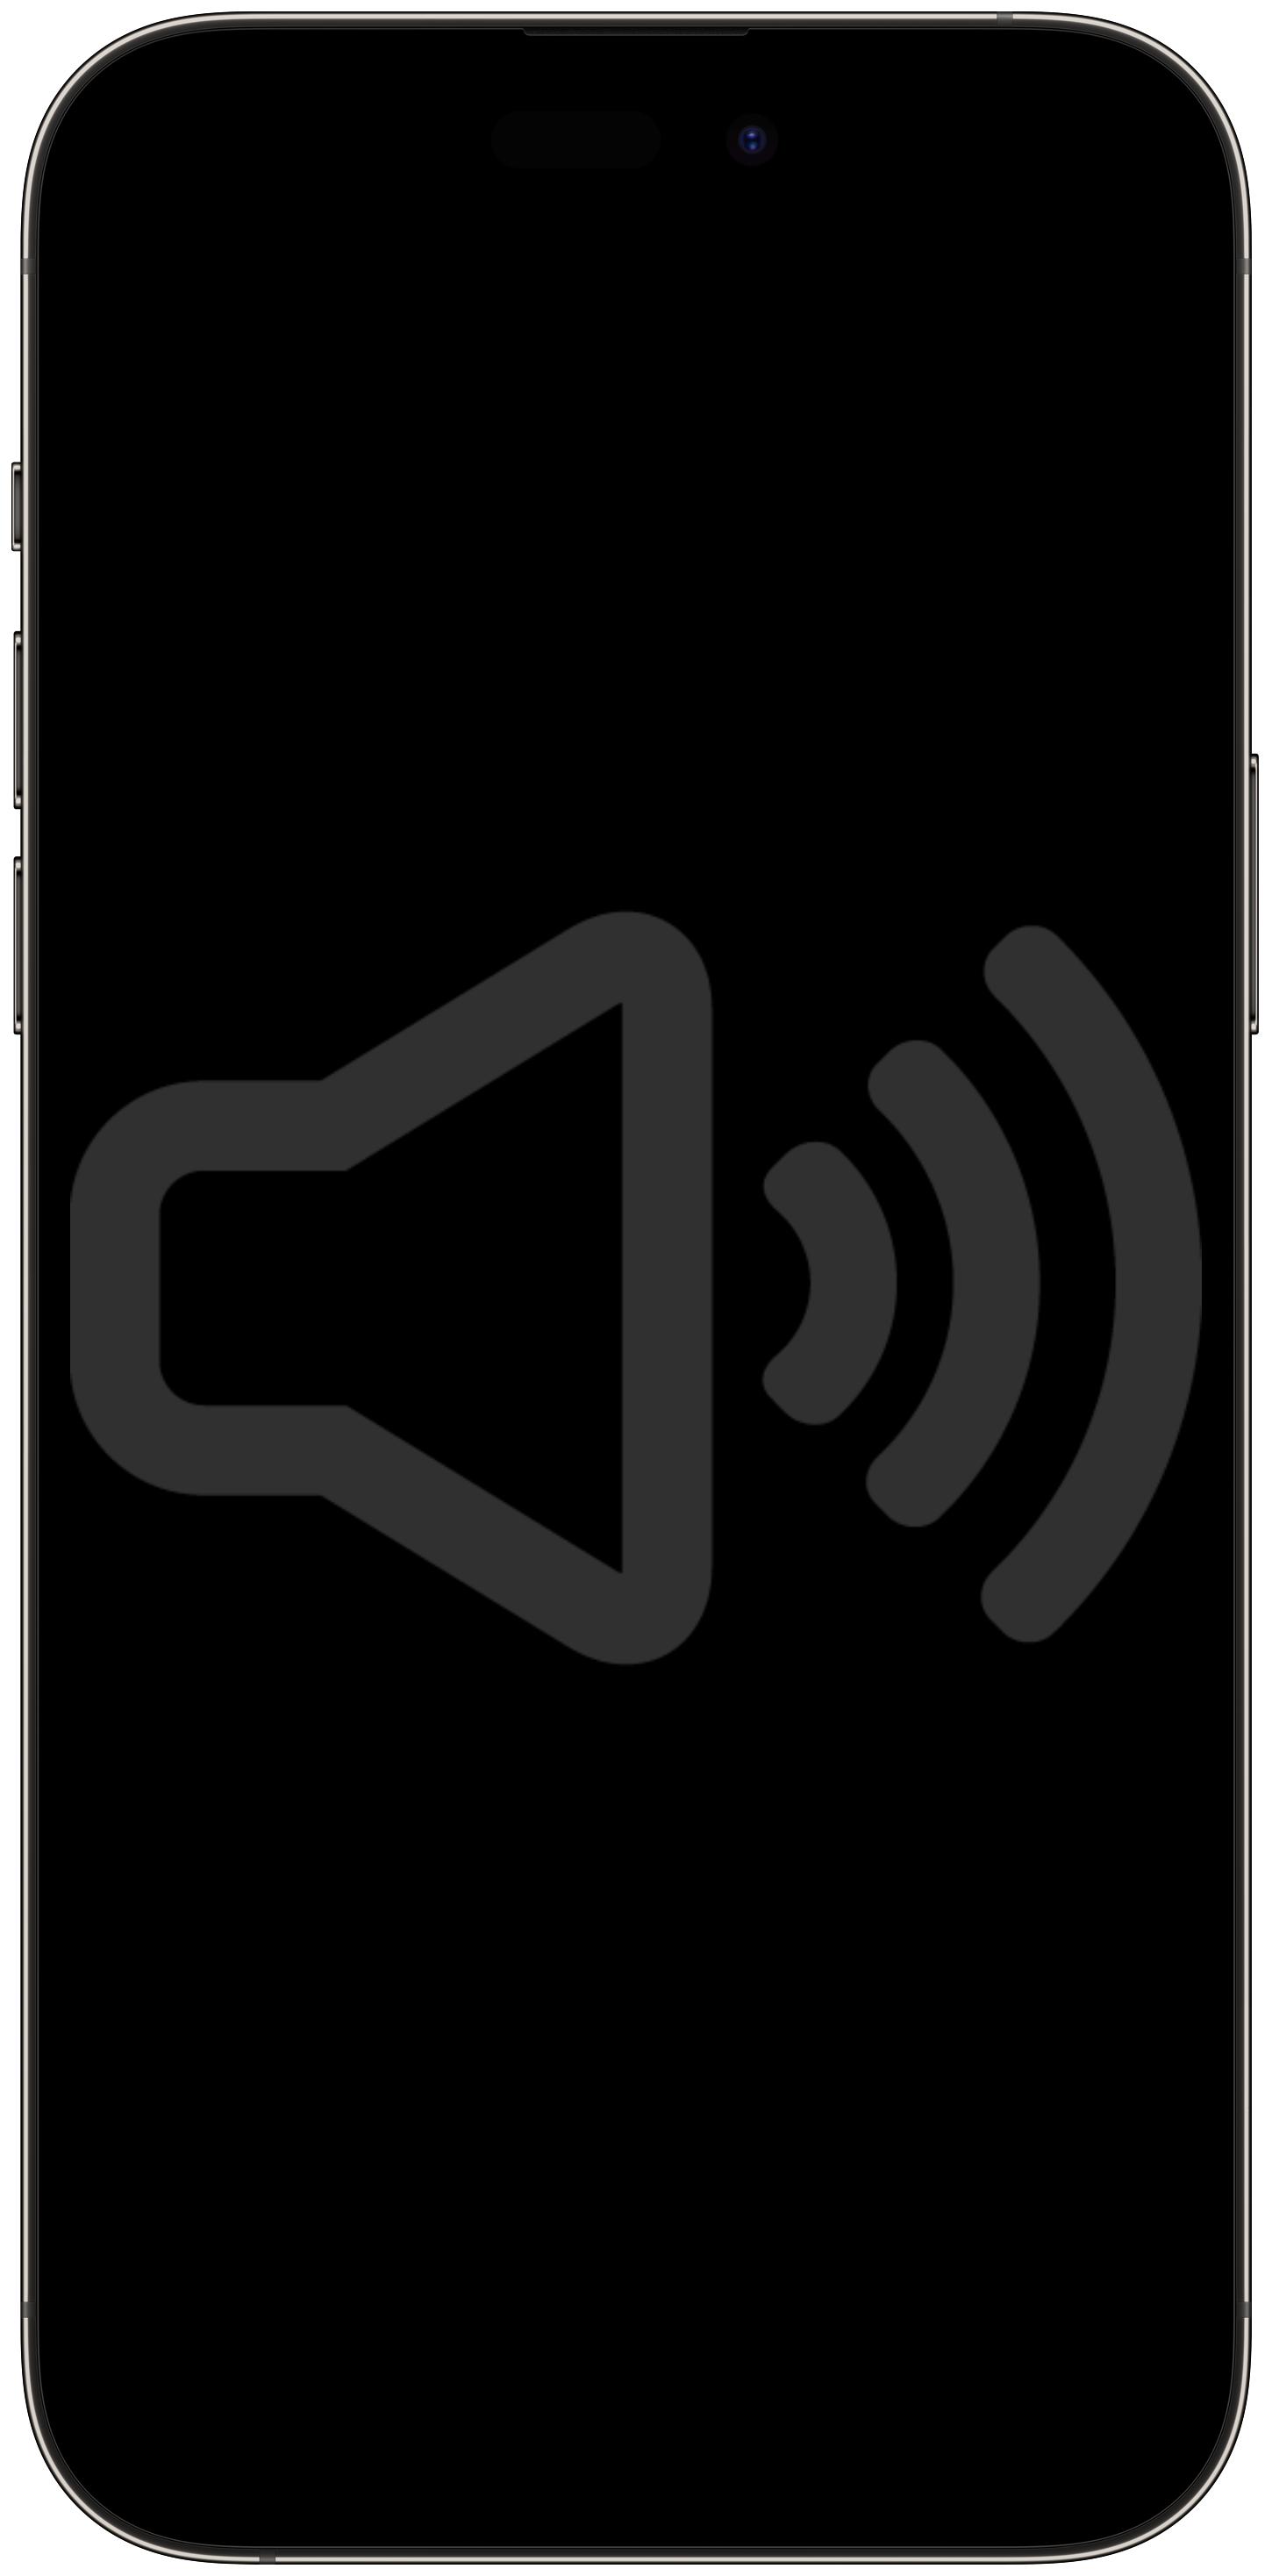 A sound logo on an iPhone.